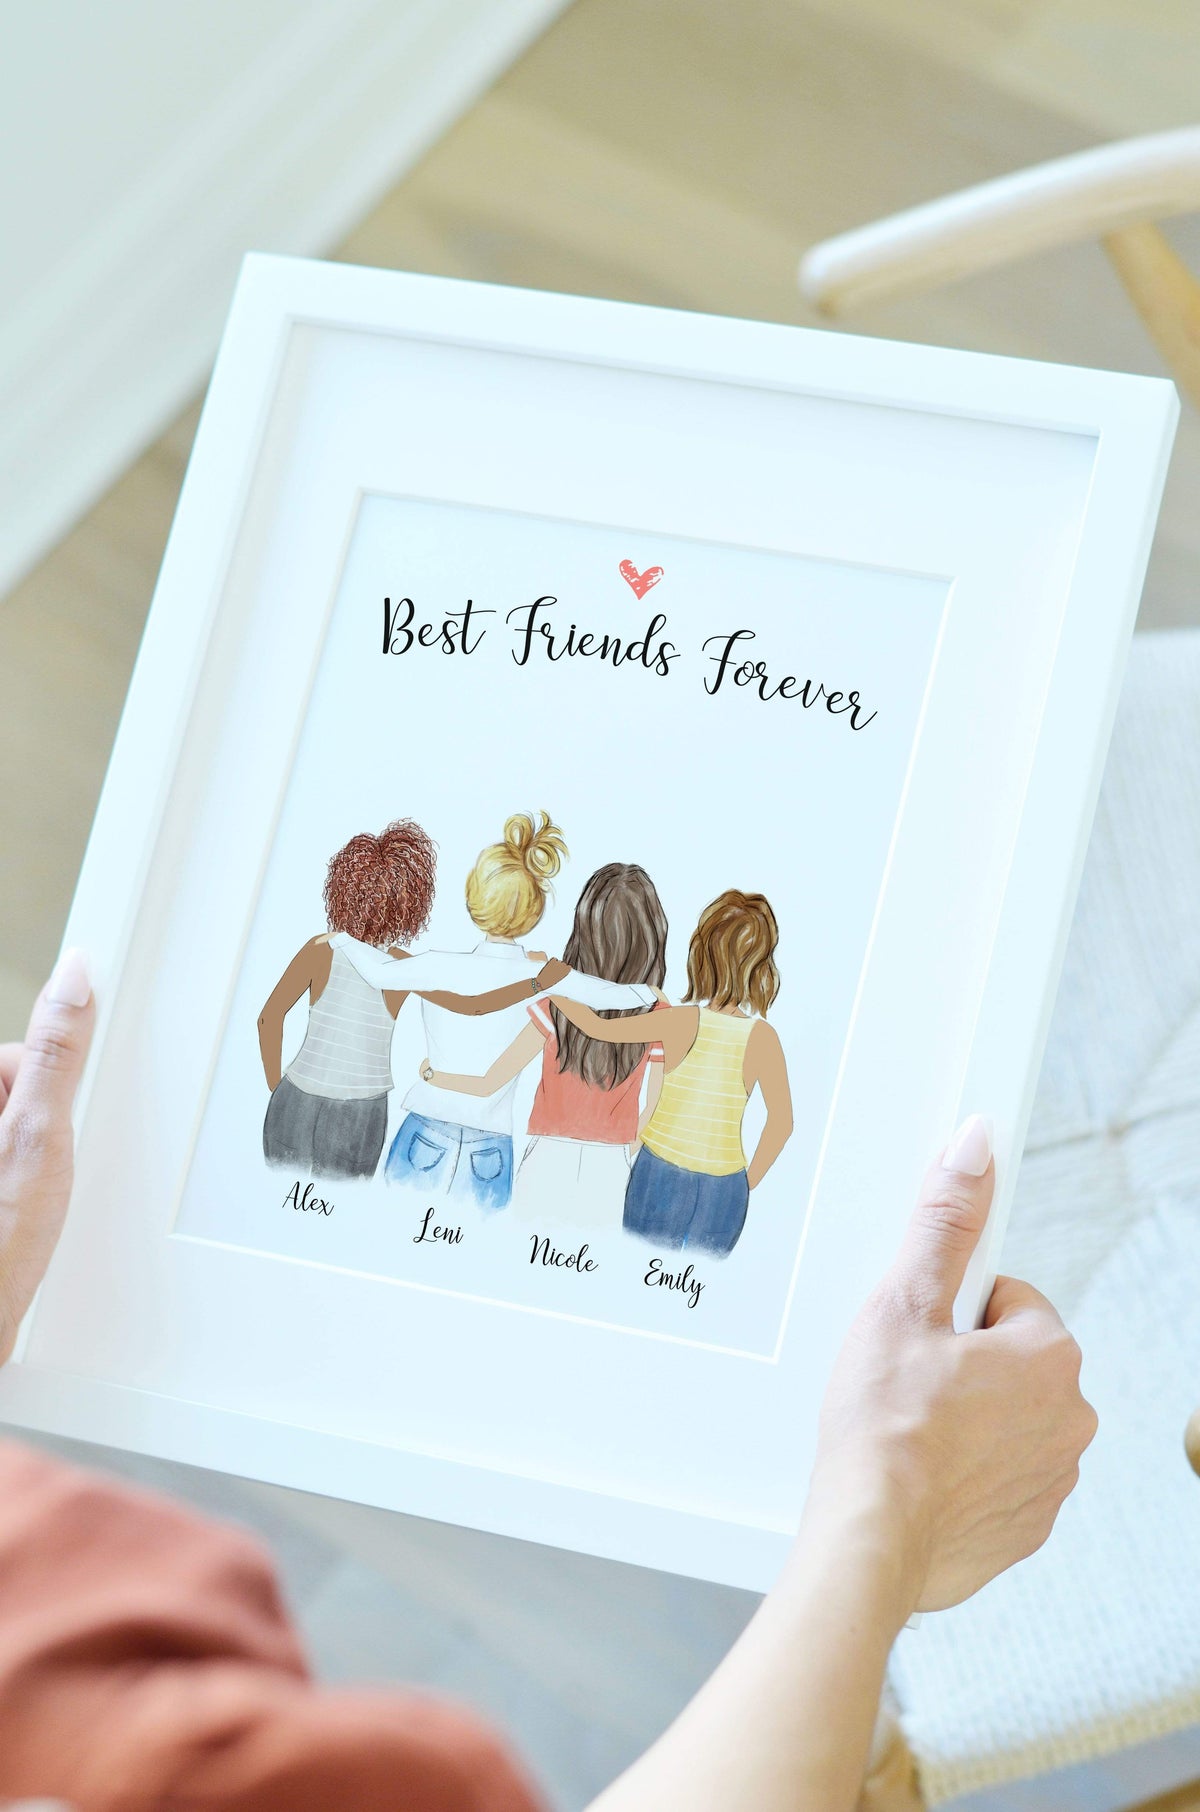 bff drawings  Best friend drawings, Bff drawings, Drawings of friends